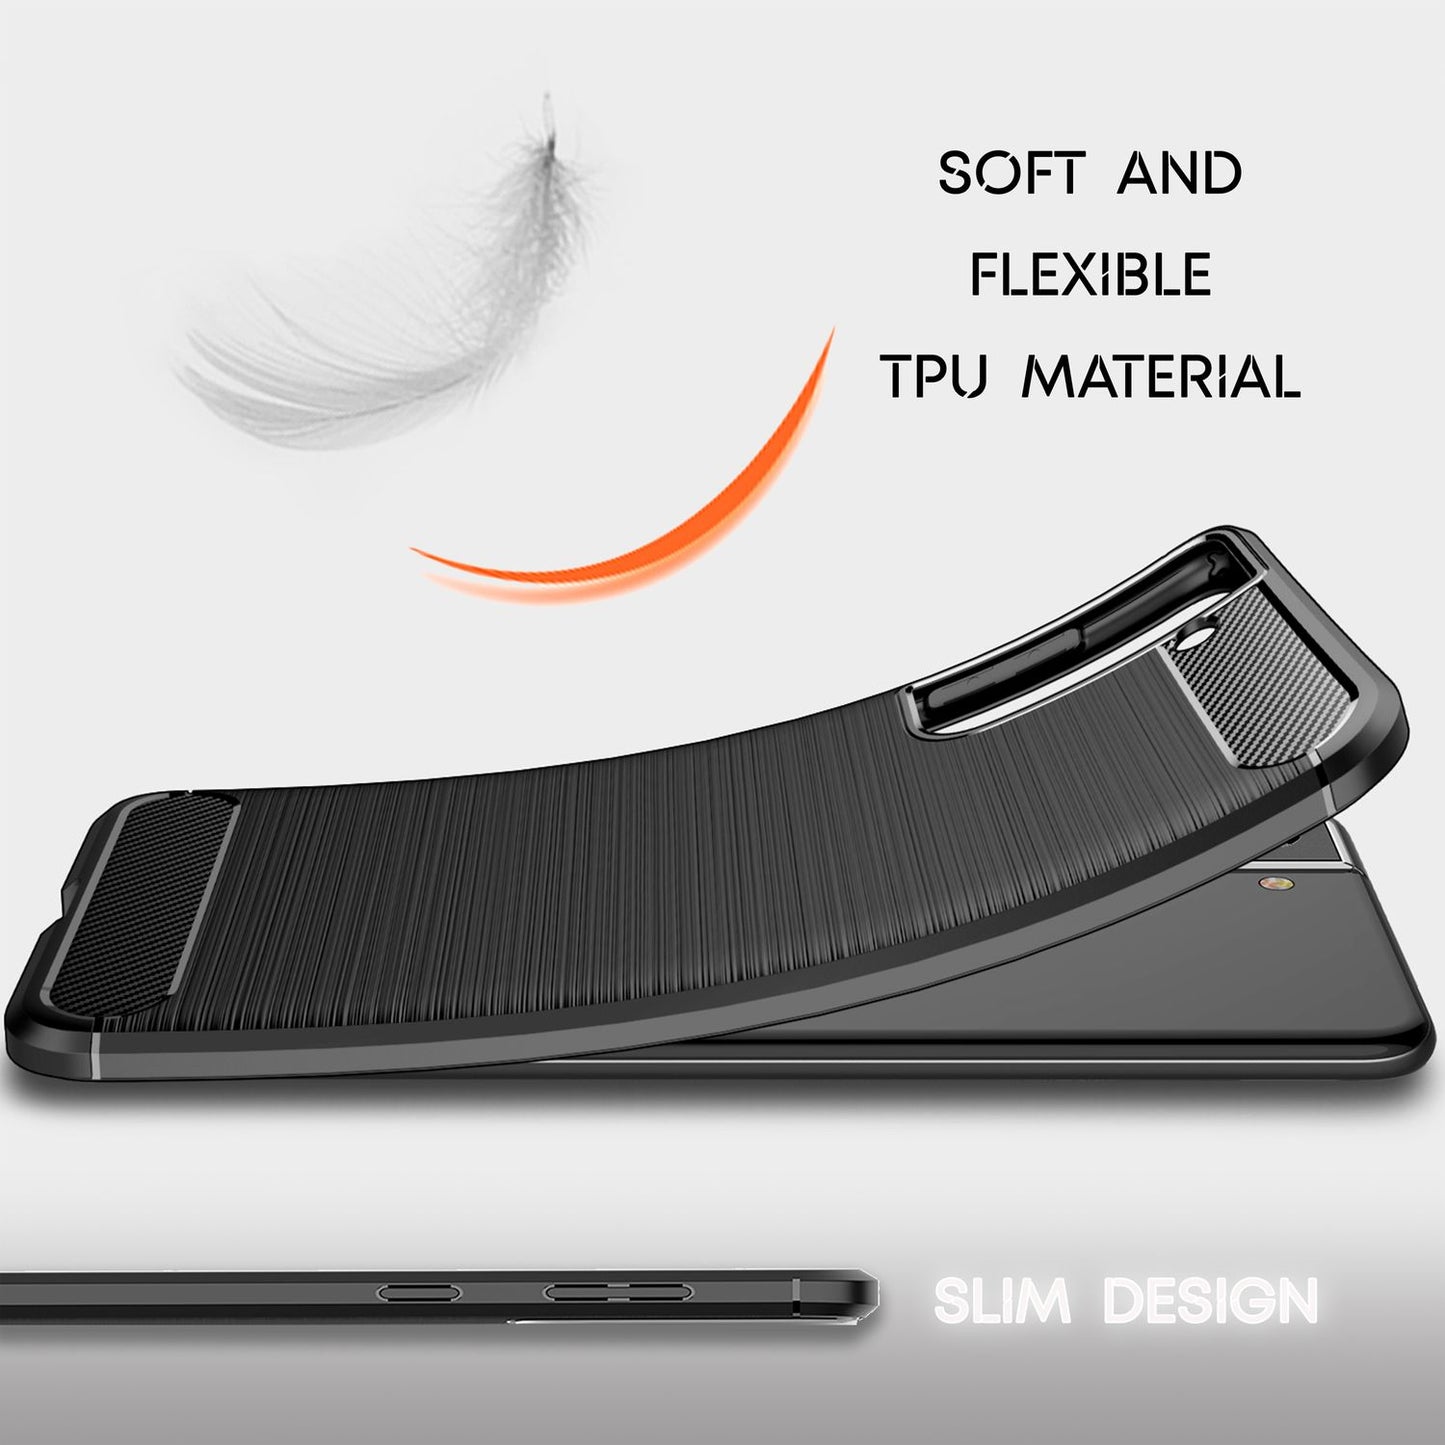 NALIA Carbon Look Case für Samsung Galaxy S22, Matt-Schwarze Silikonhülle Anti-Fingerabdruck Kohlefaser-Optik, Handyhülle Schutzhülle